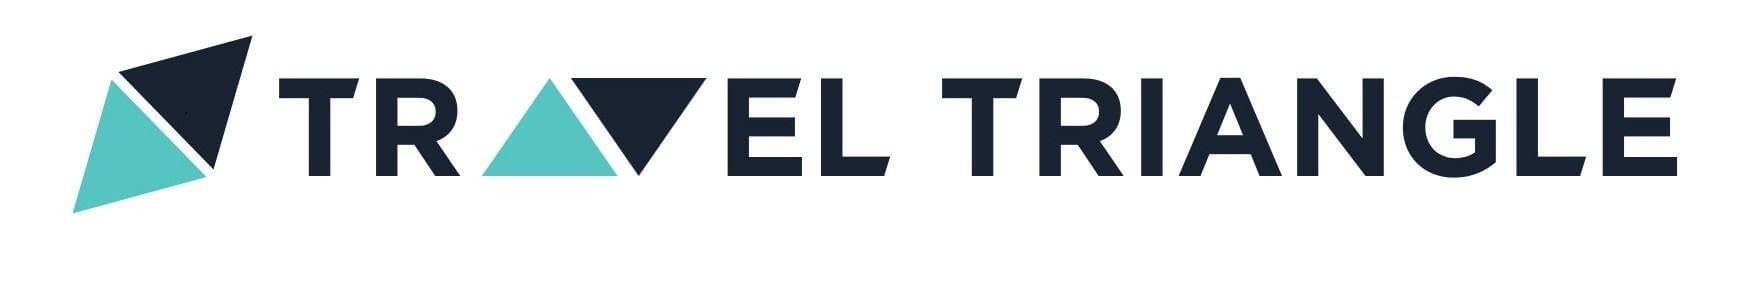 marketing strategy of travrltriangle - traveltriangle logo